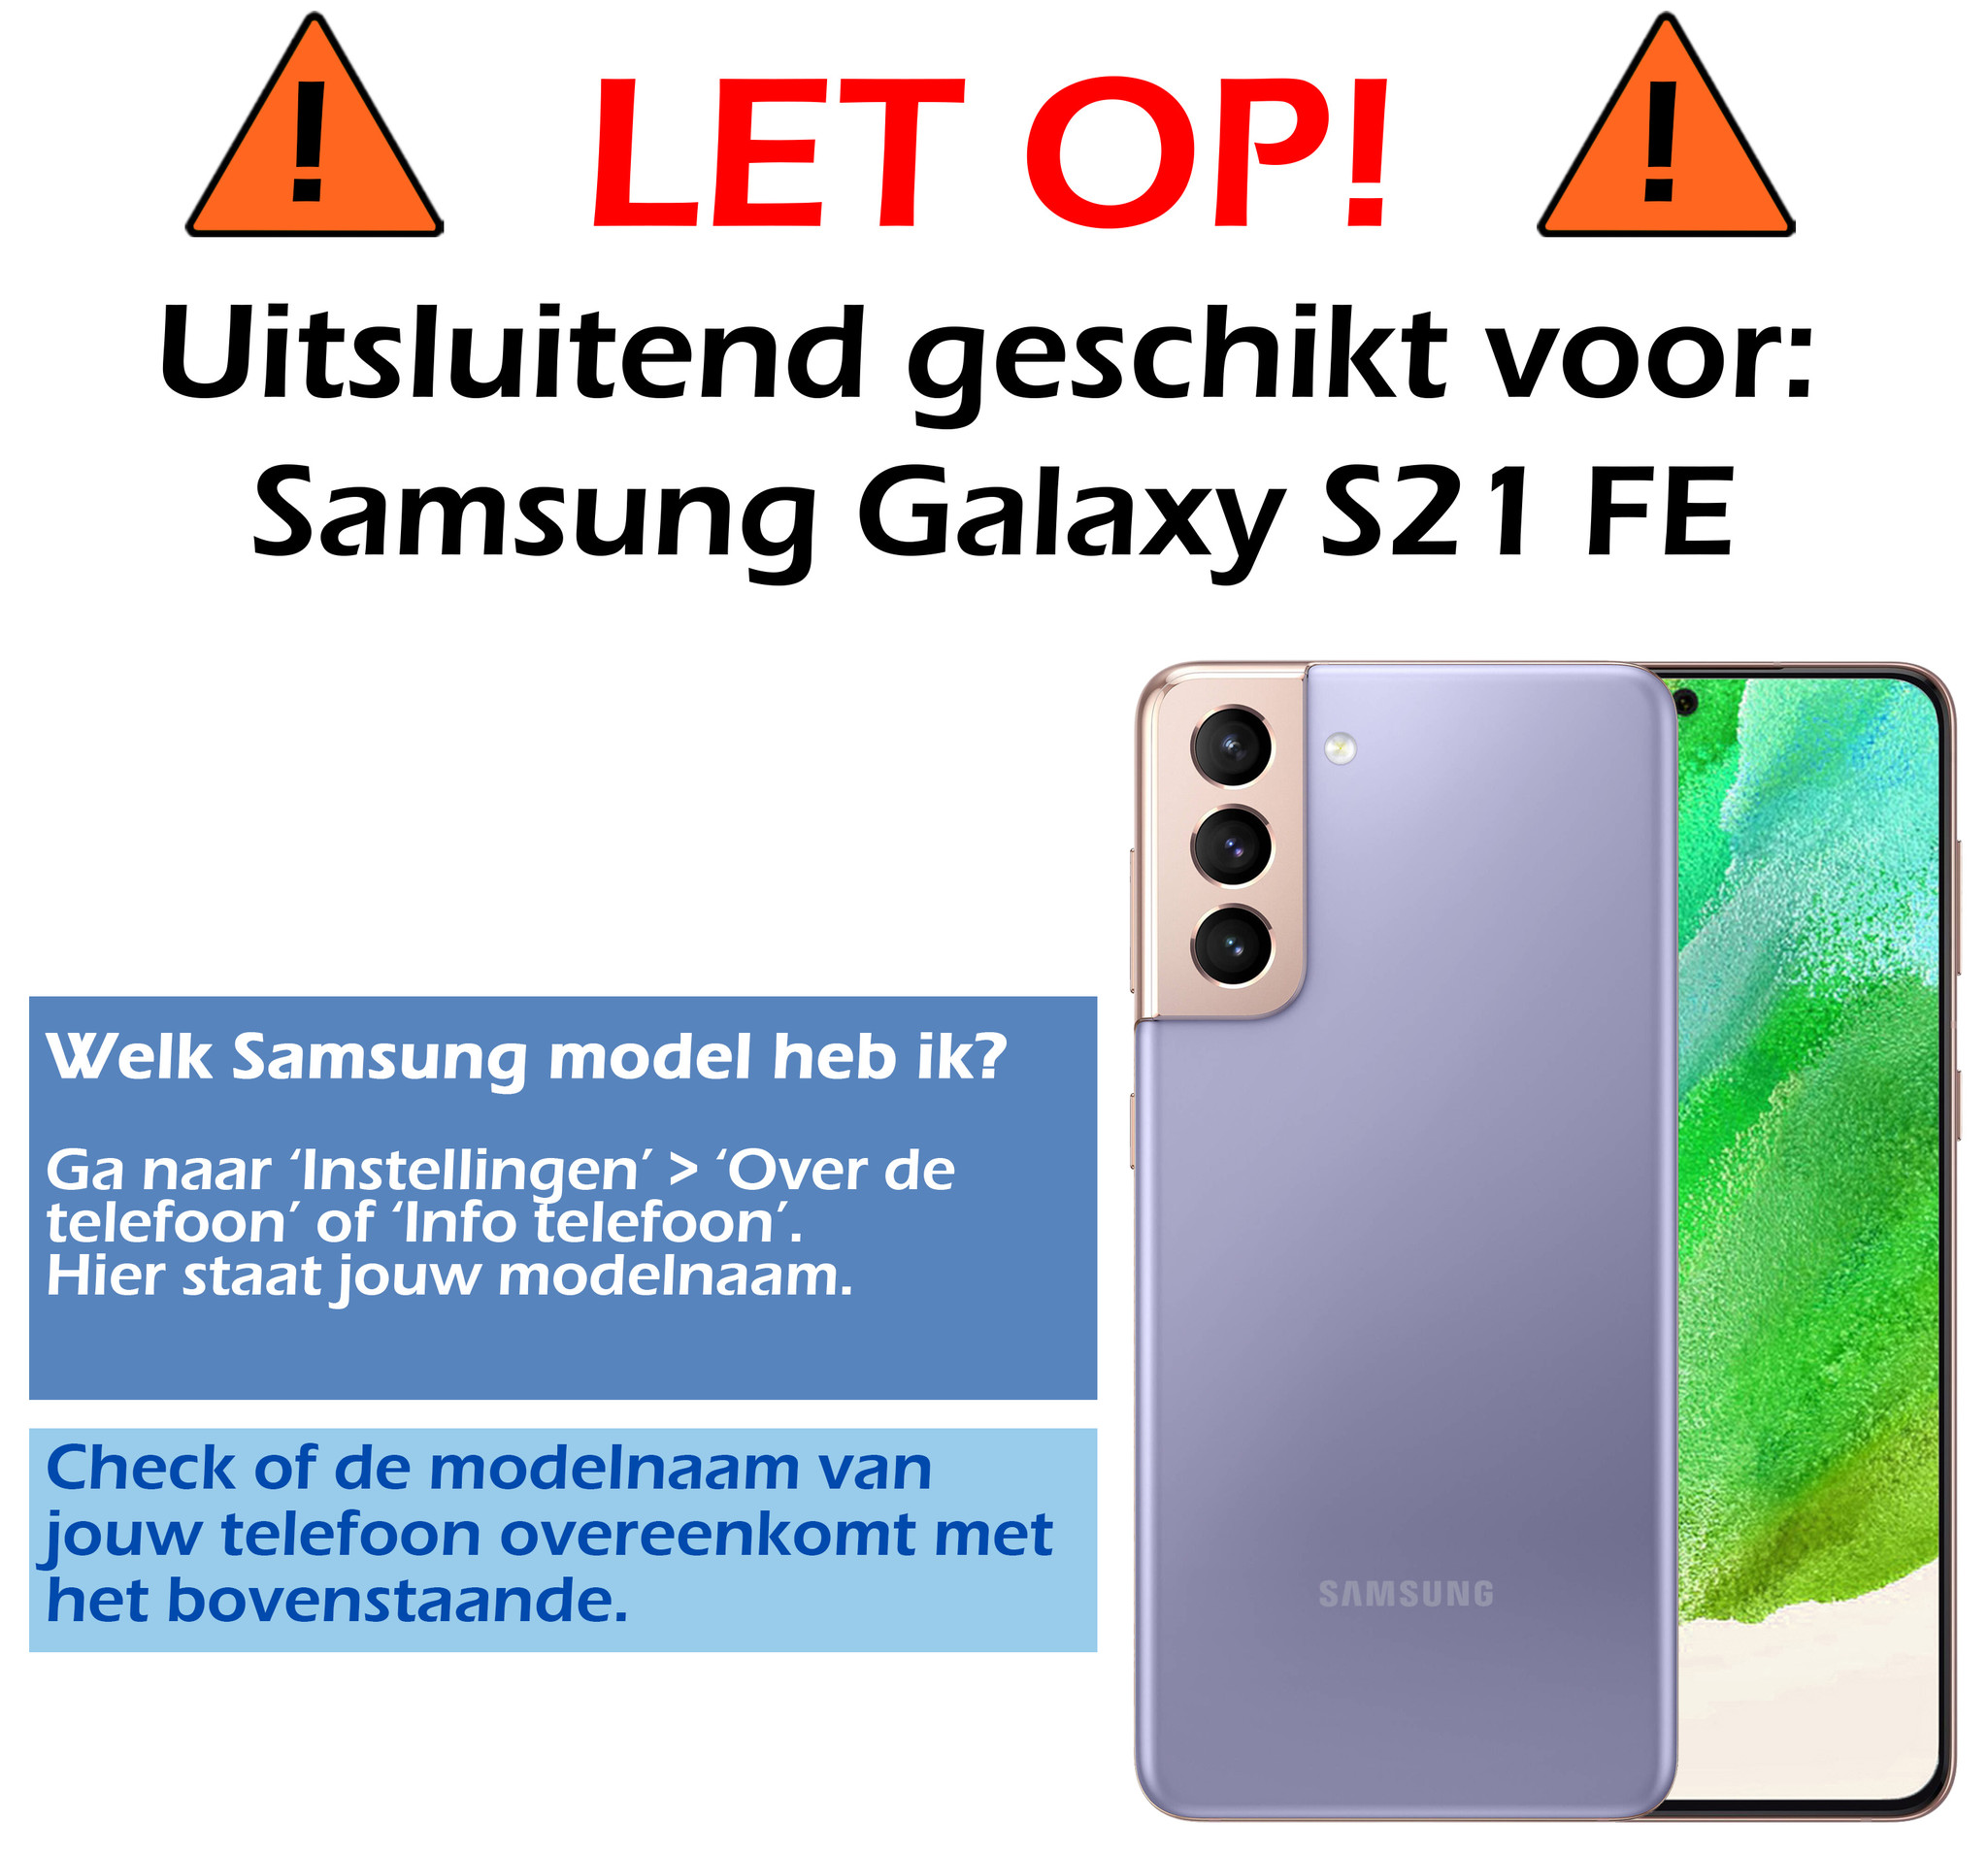 Nomfy Samsung Galaxy S21 FE Hoes Bookcase Bruin - Samsung Galaxy S21 FE Book Cover Flipcase - Samsung Galaxy S21 FE Hoesje - Bruin